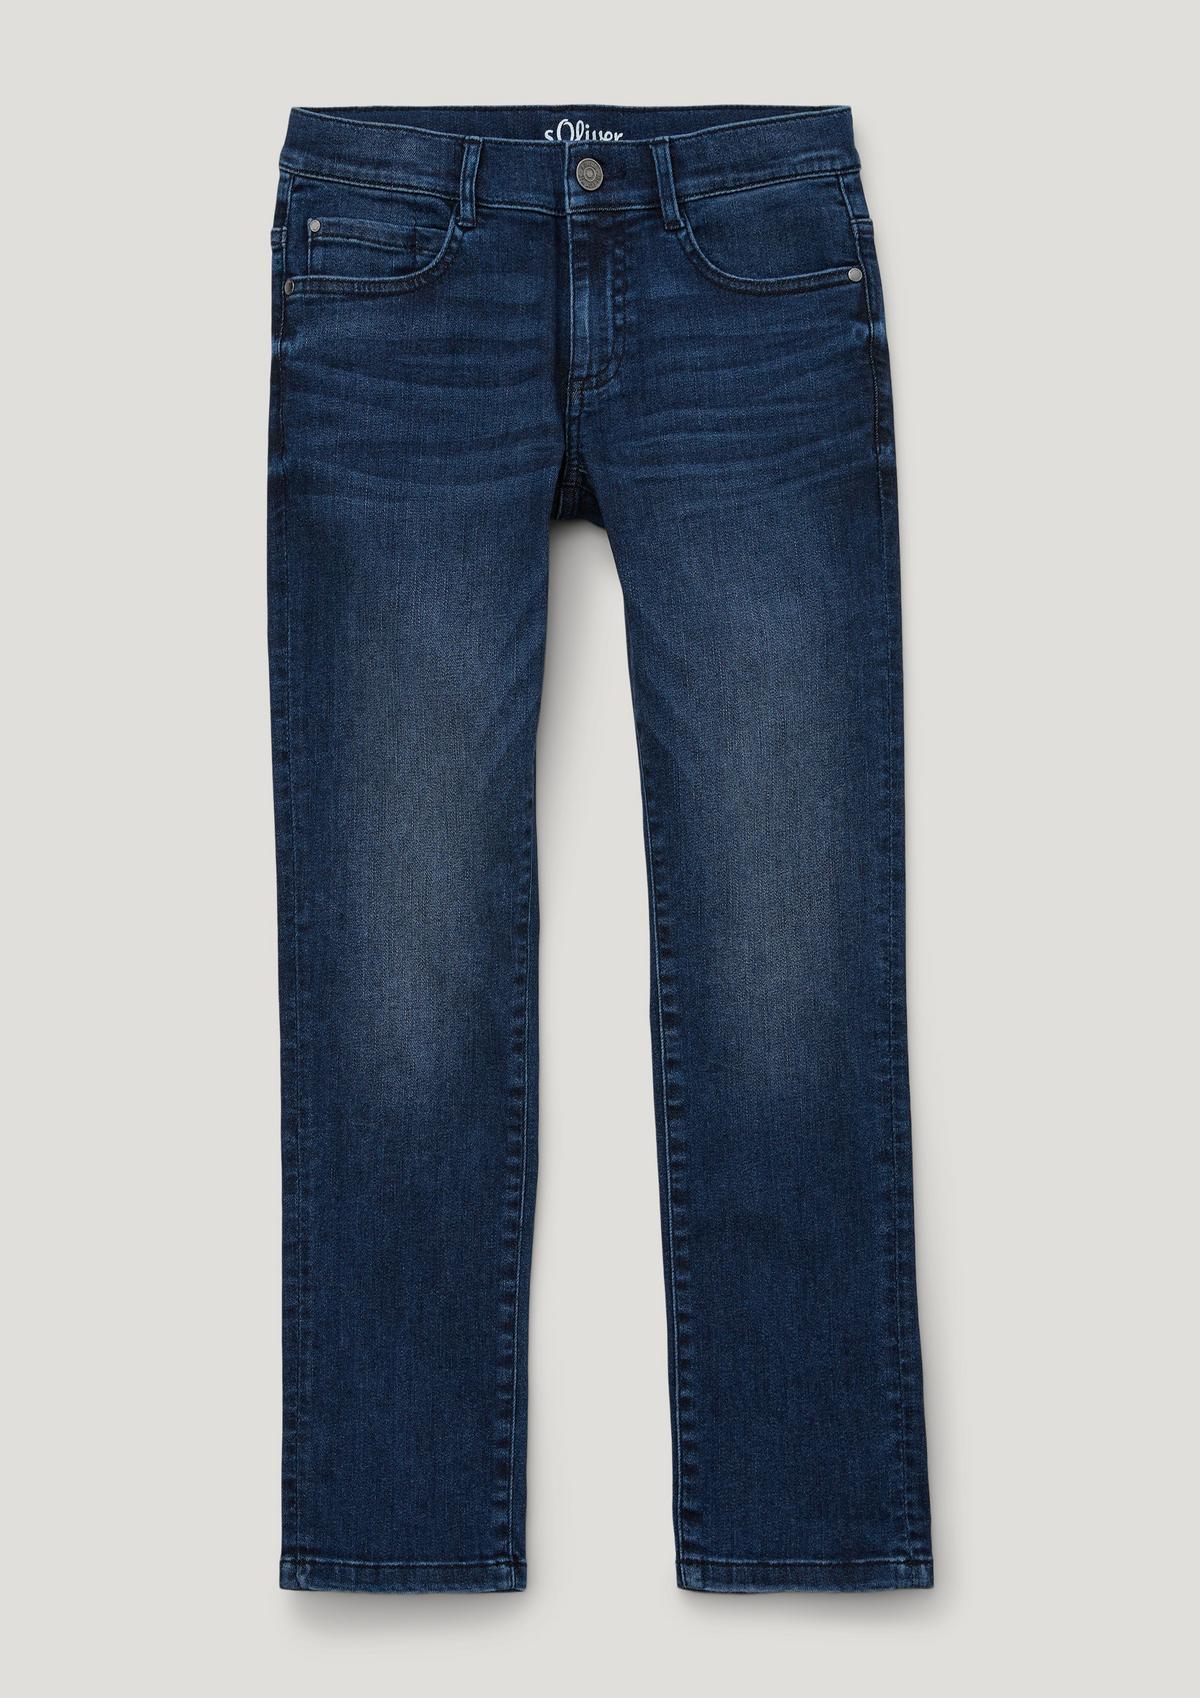 s.Oliver Seattle jeans / regular fit / mid rise / slim leg